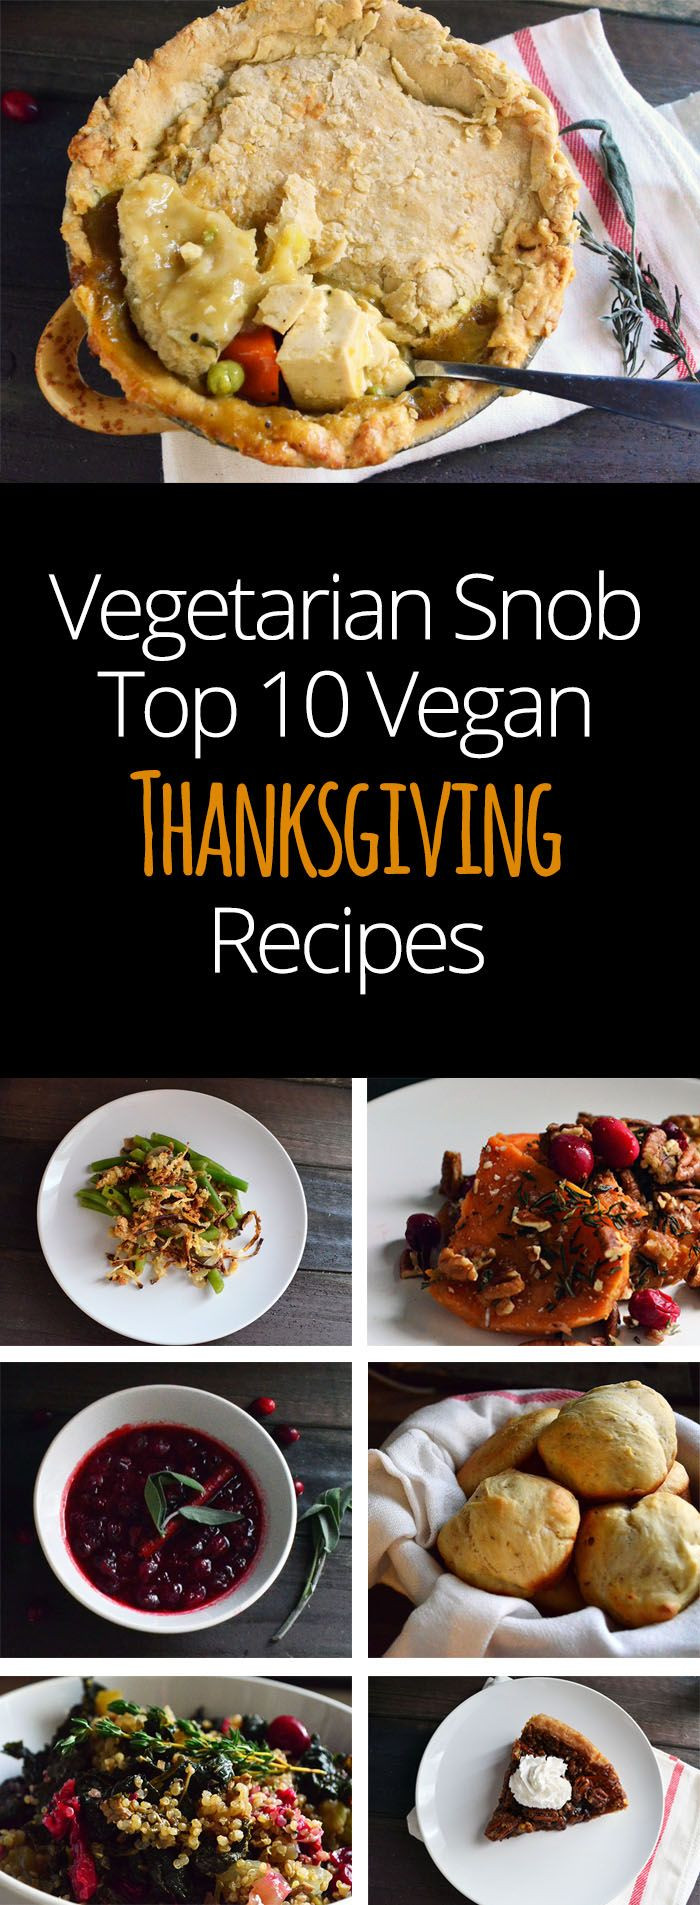 Thanksgiving Recipes Vegan
 Top 10 Vegan Thanksgiving Recipes Pescatarian